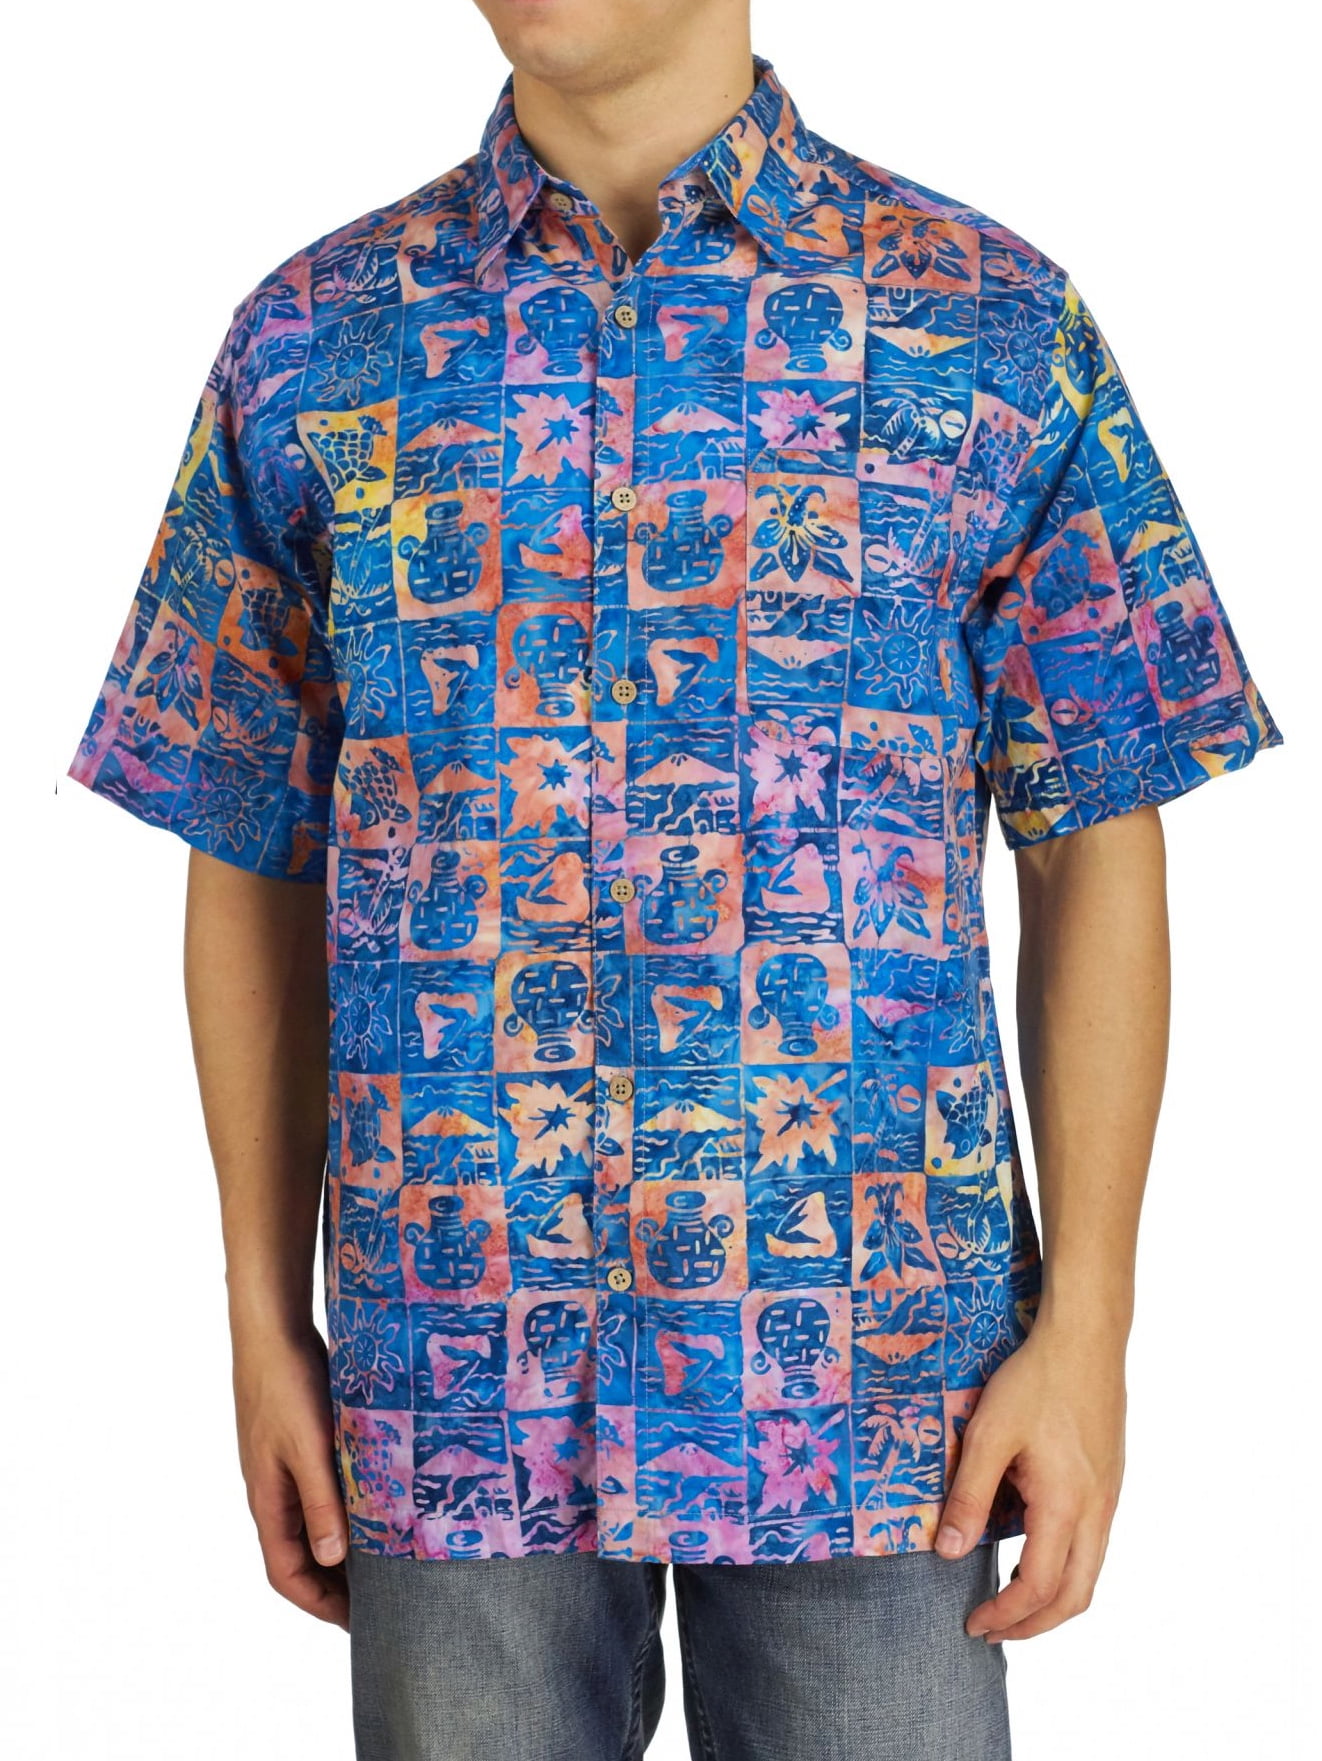 Basic Options - Basic Options Men's Squares Batik Shirt, Denim ...